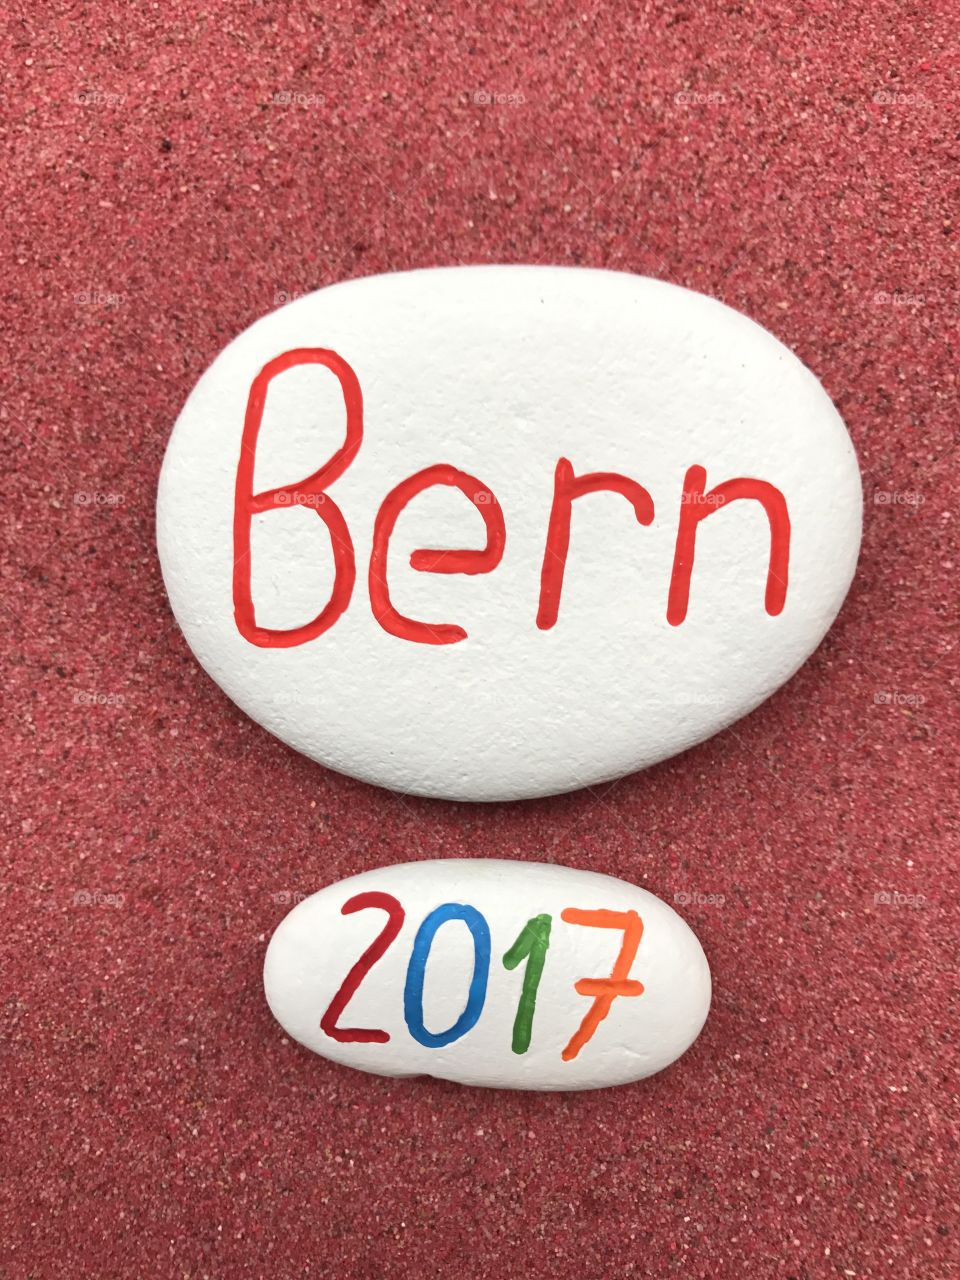 Bern 2017 with stone design